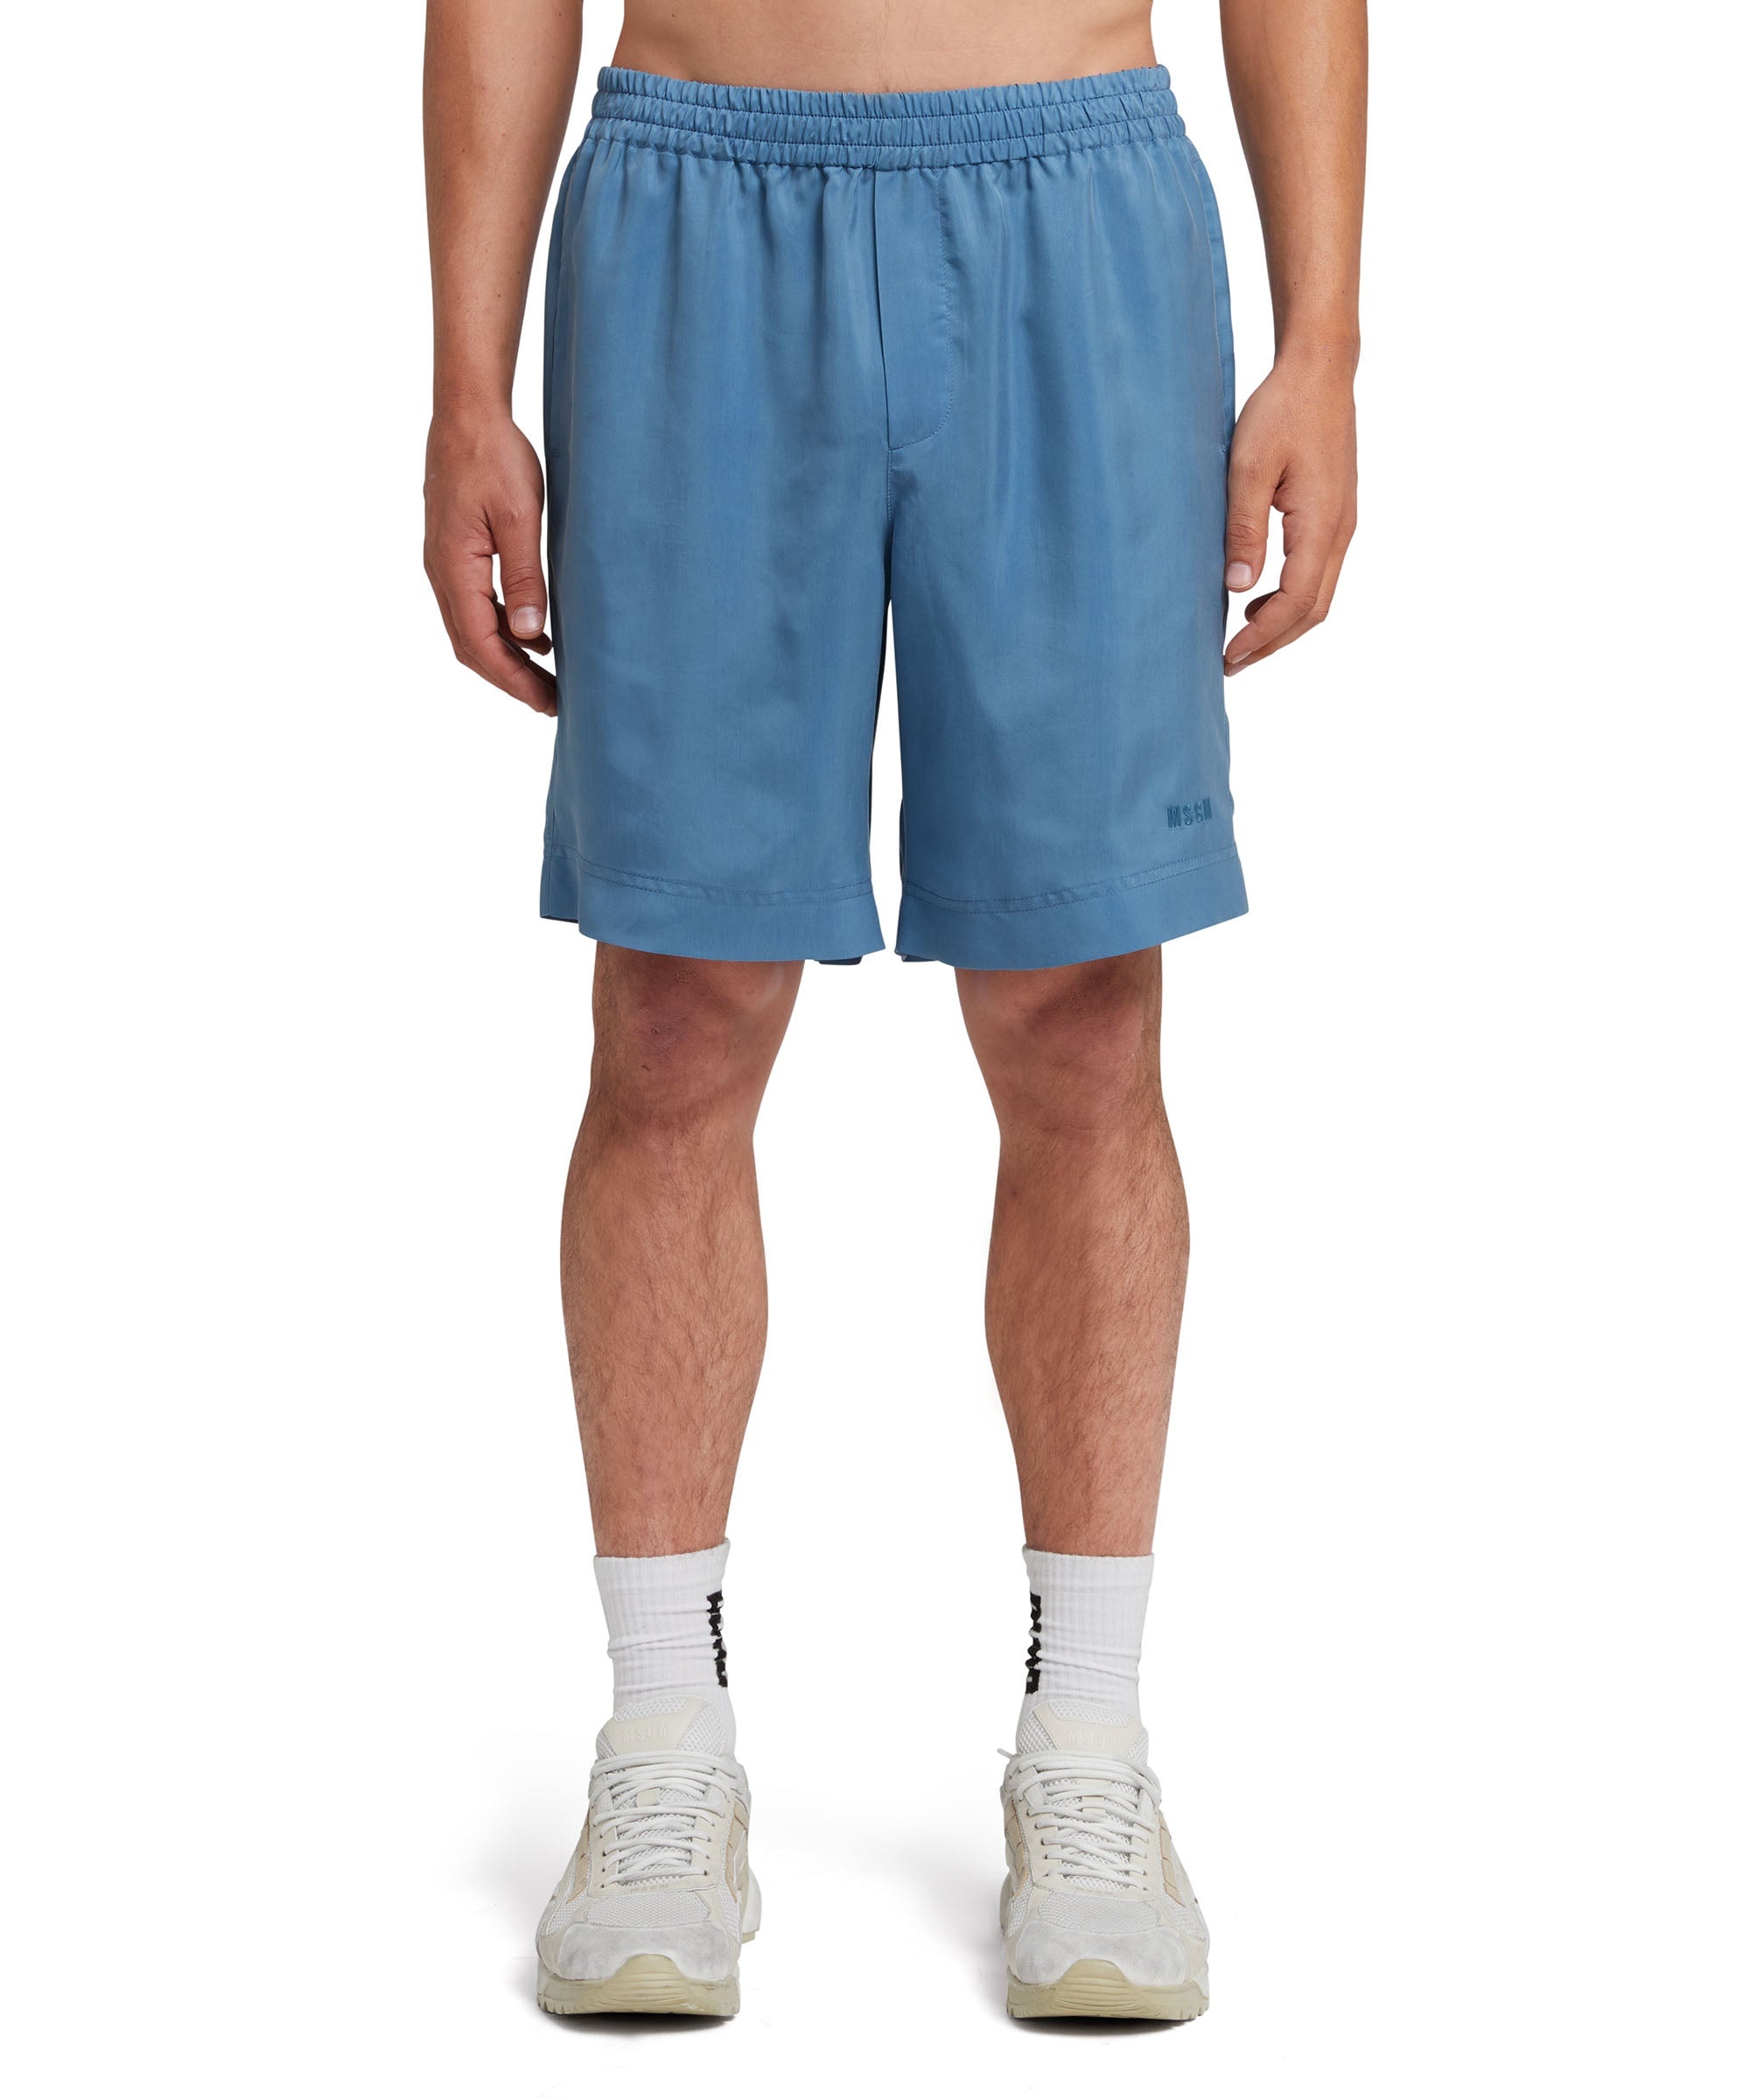 Cupro shorts - 2